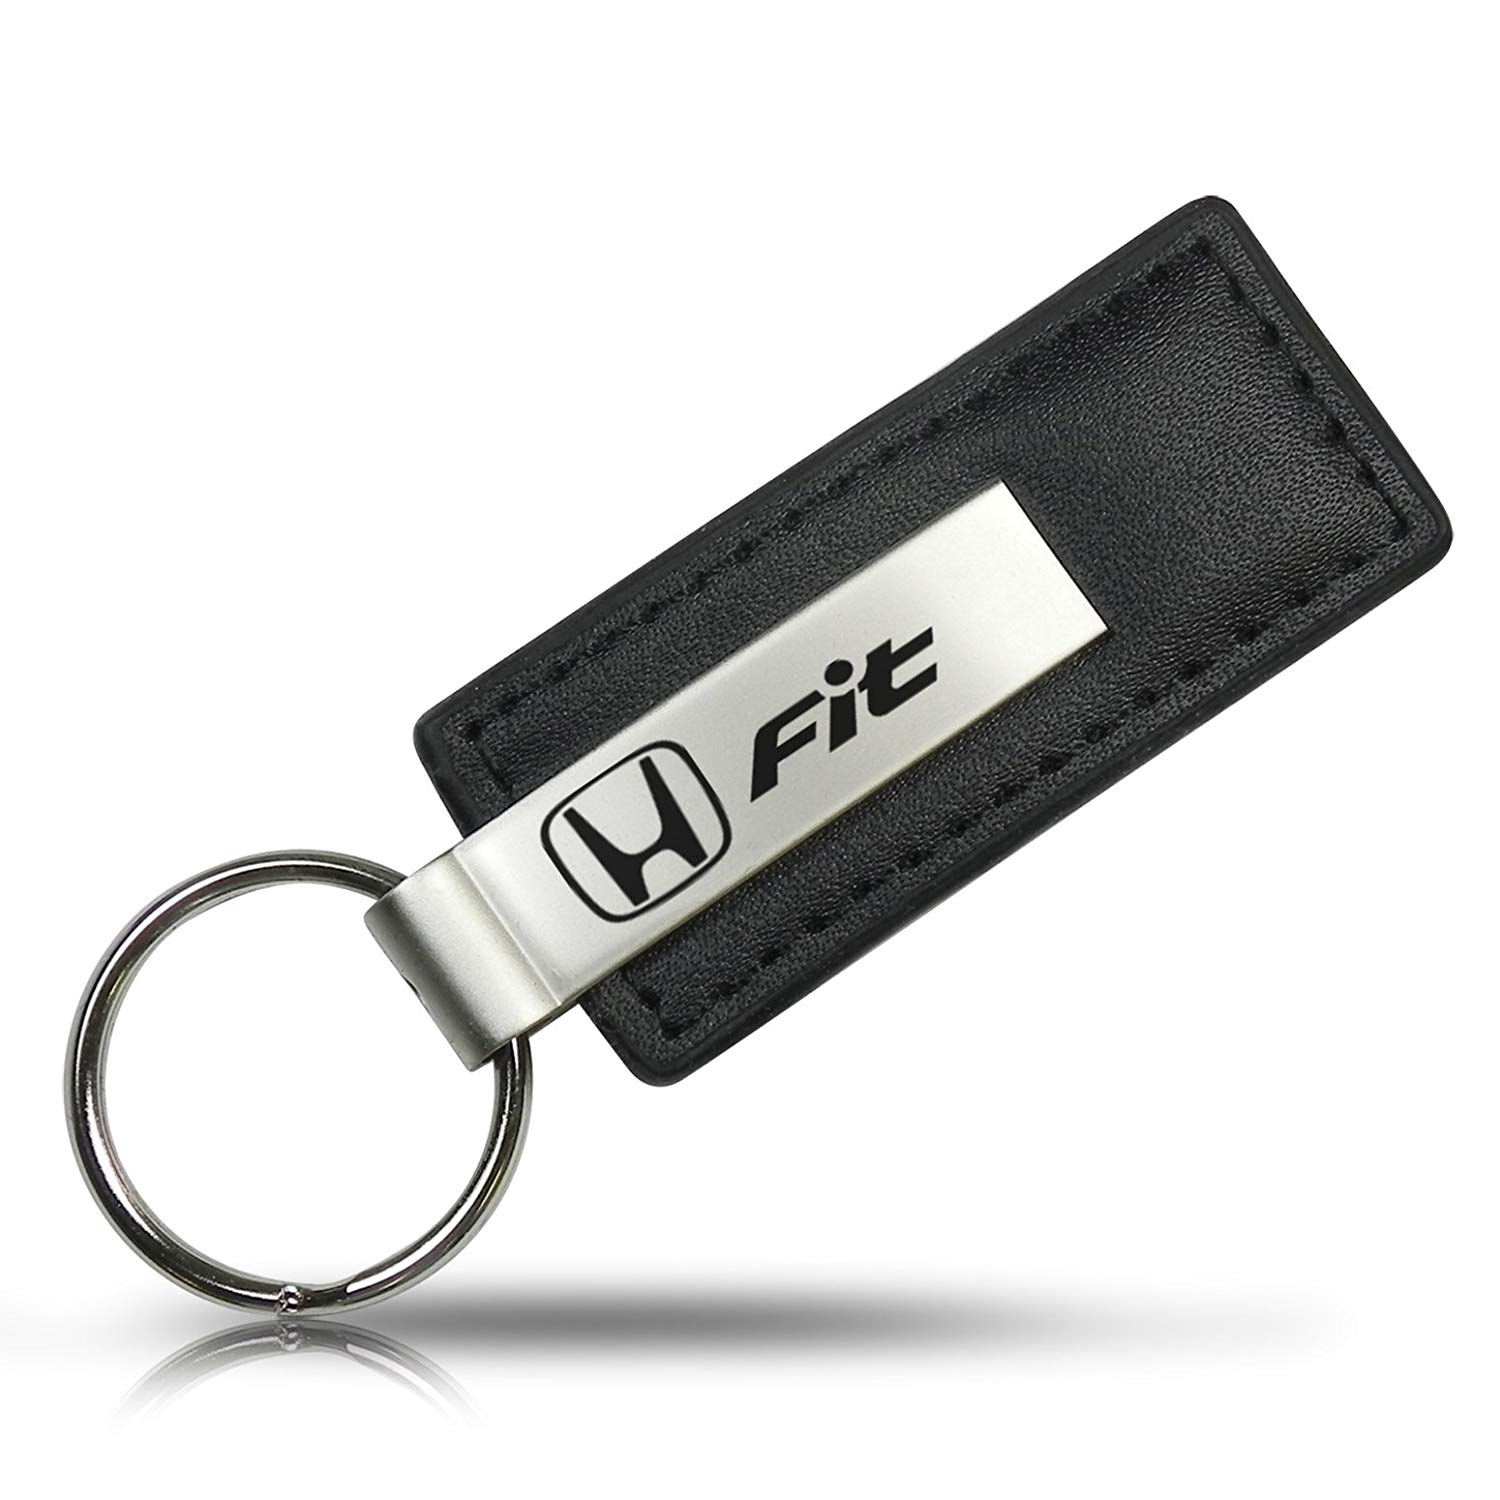 Honda Fit Logo - Amazon.com: Honda Fit Black Leather Key Chain: Automotive